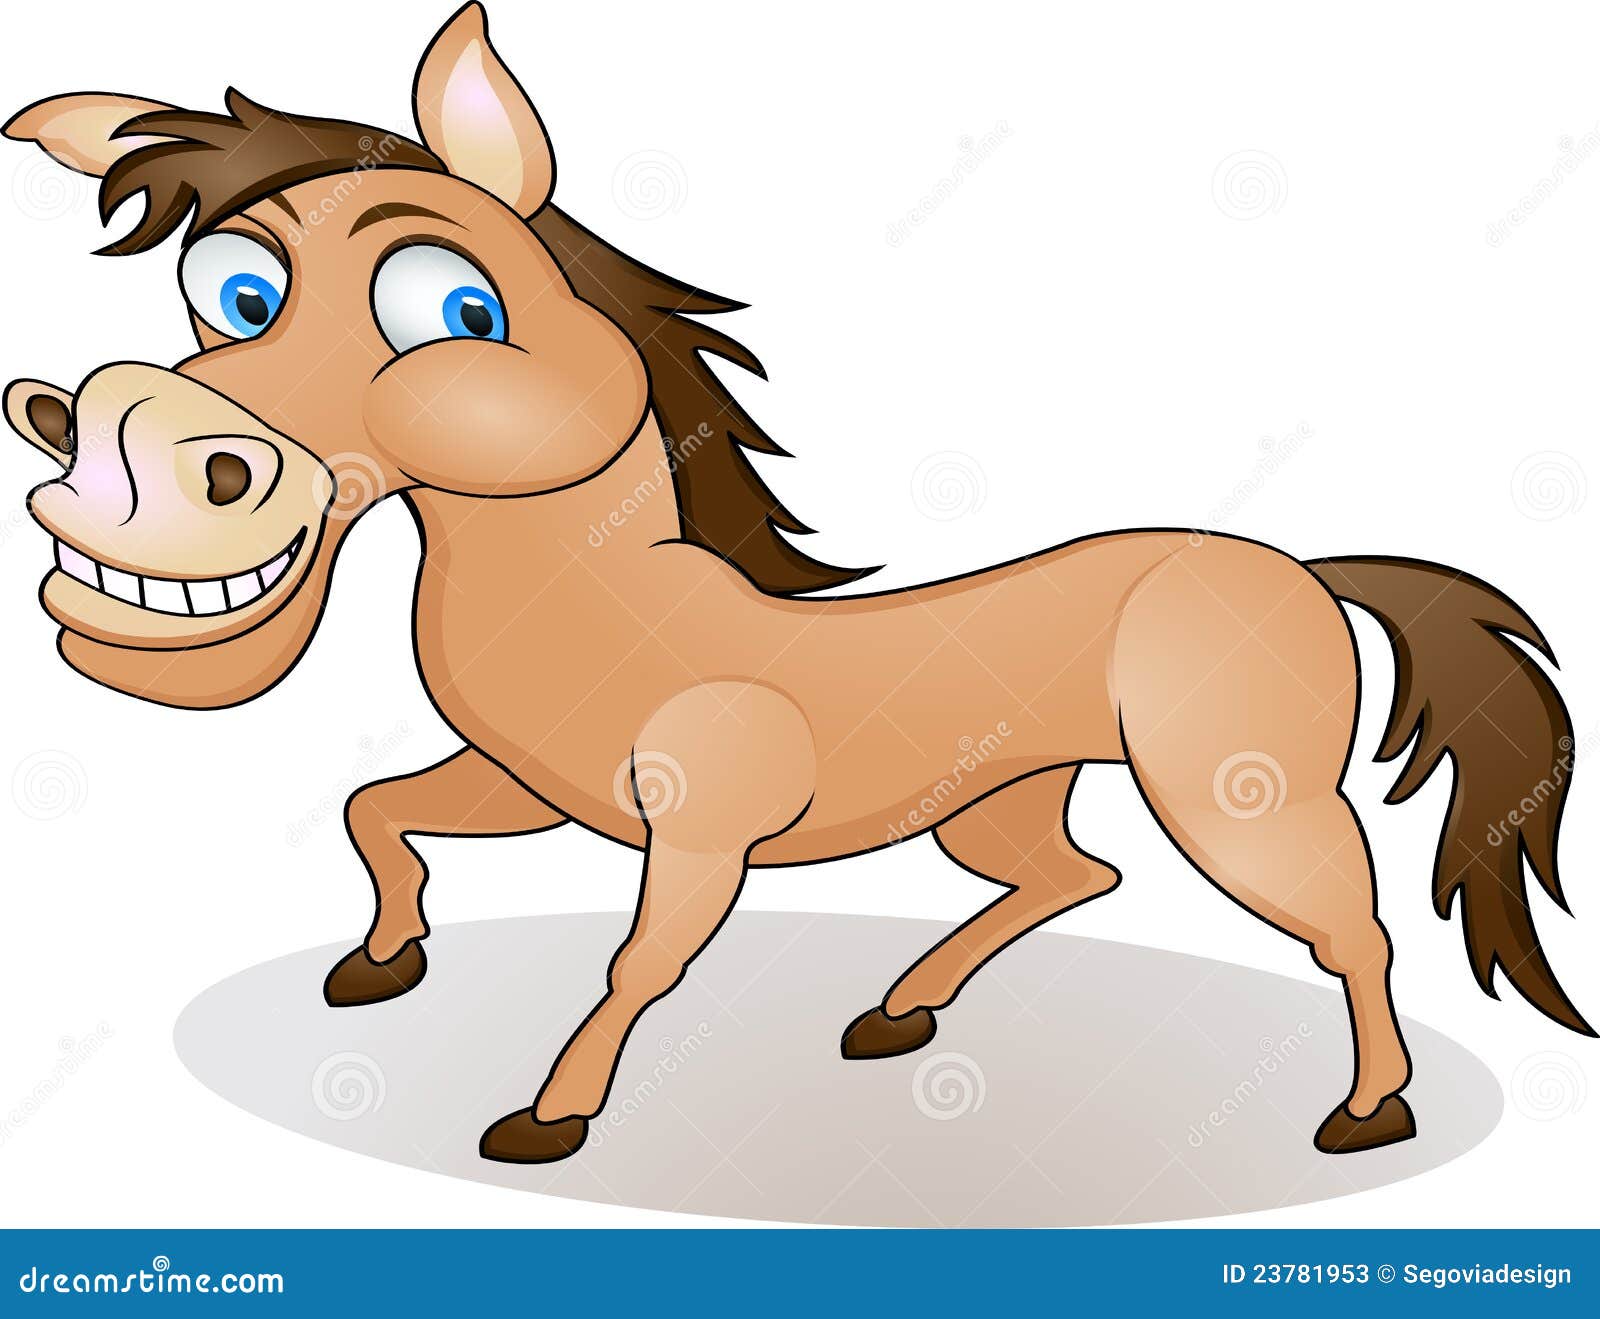 Funny Horse Cartoon Stock Photos - Image: 23781953